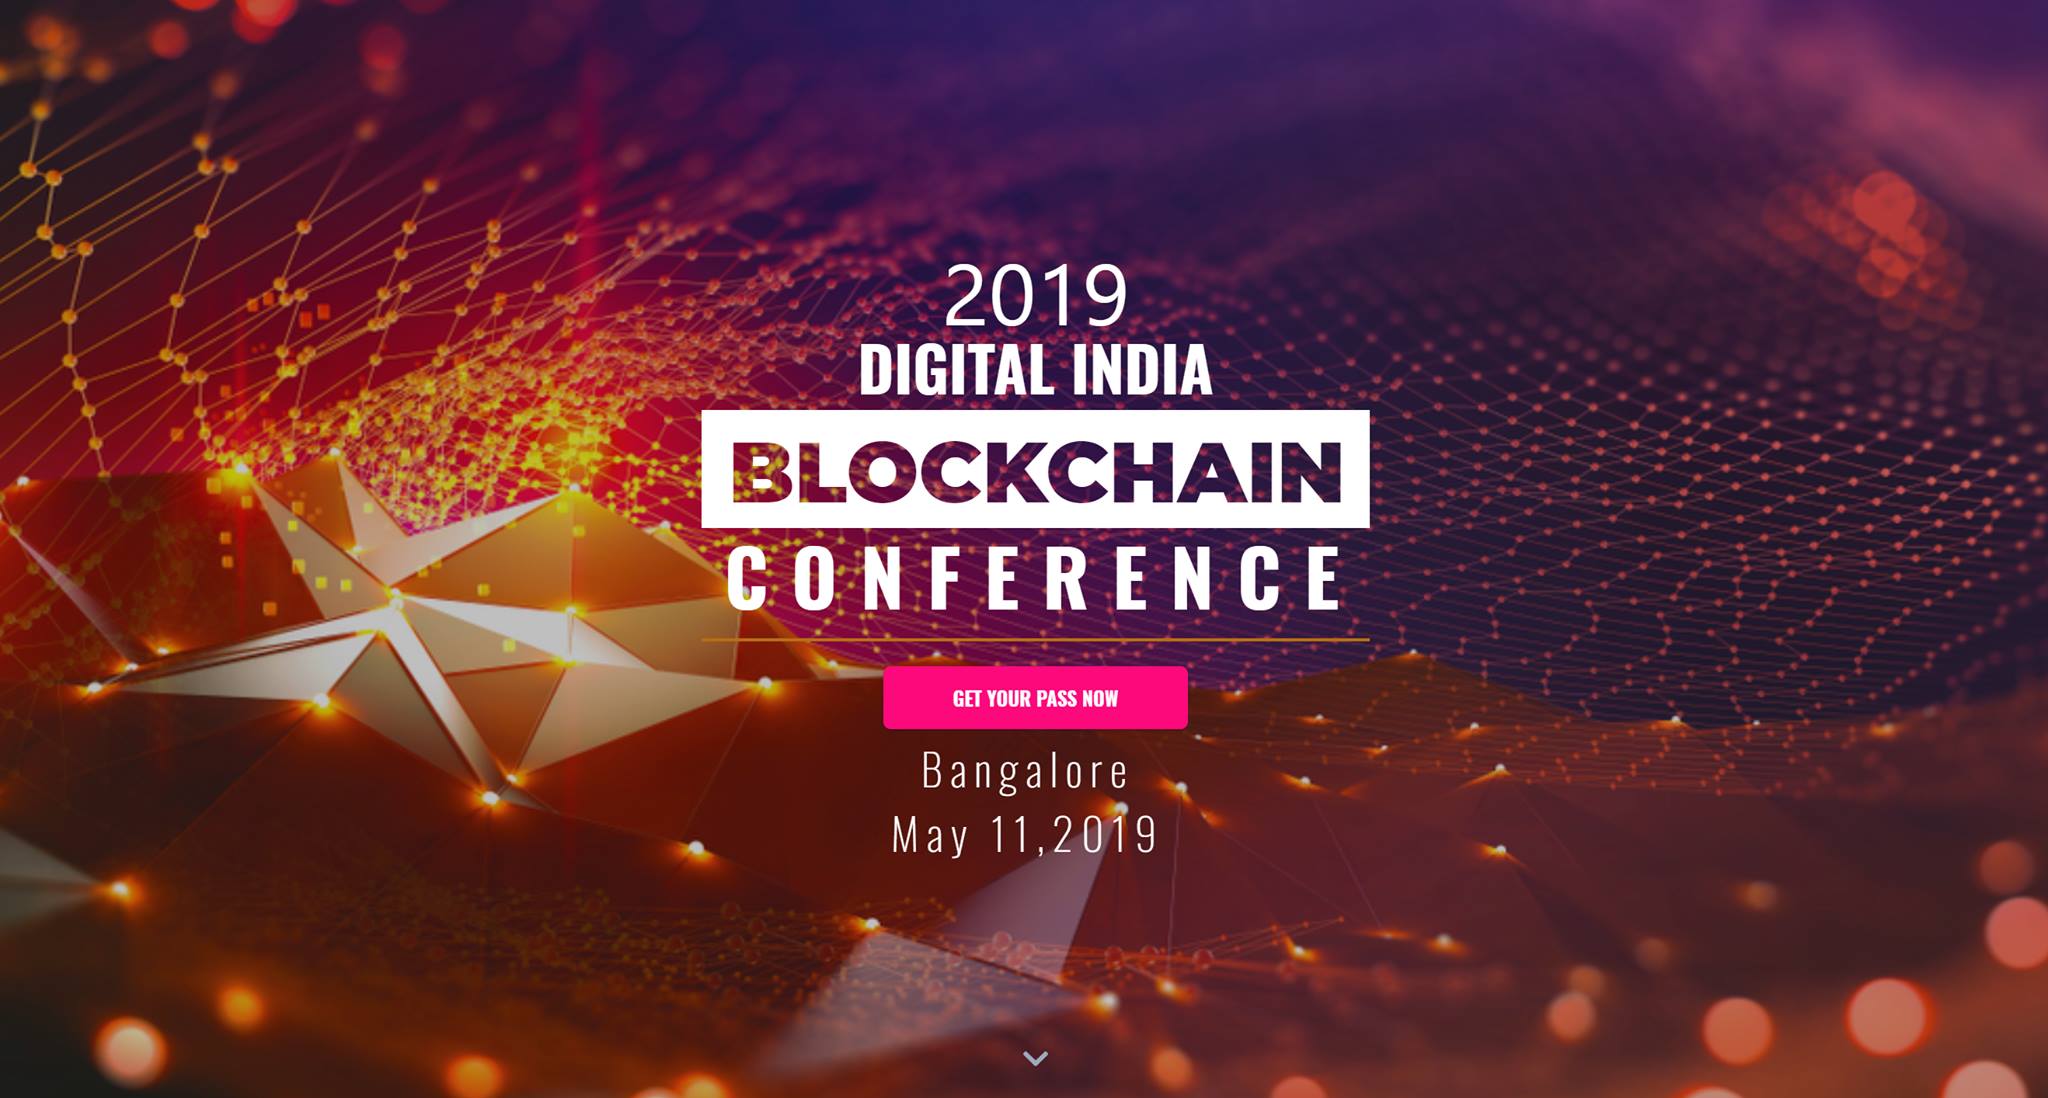 Digital India Blockchain Conference 2019